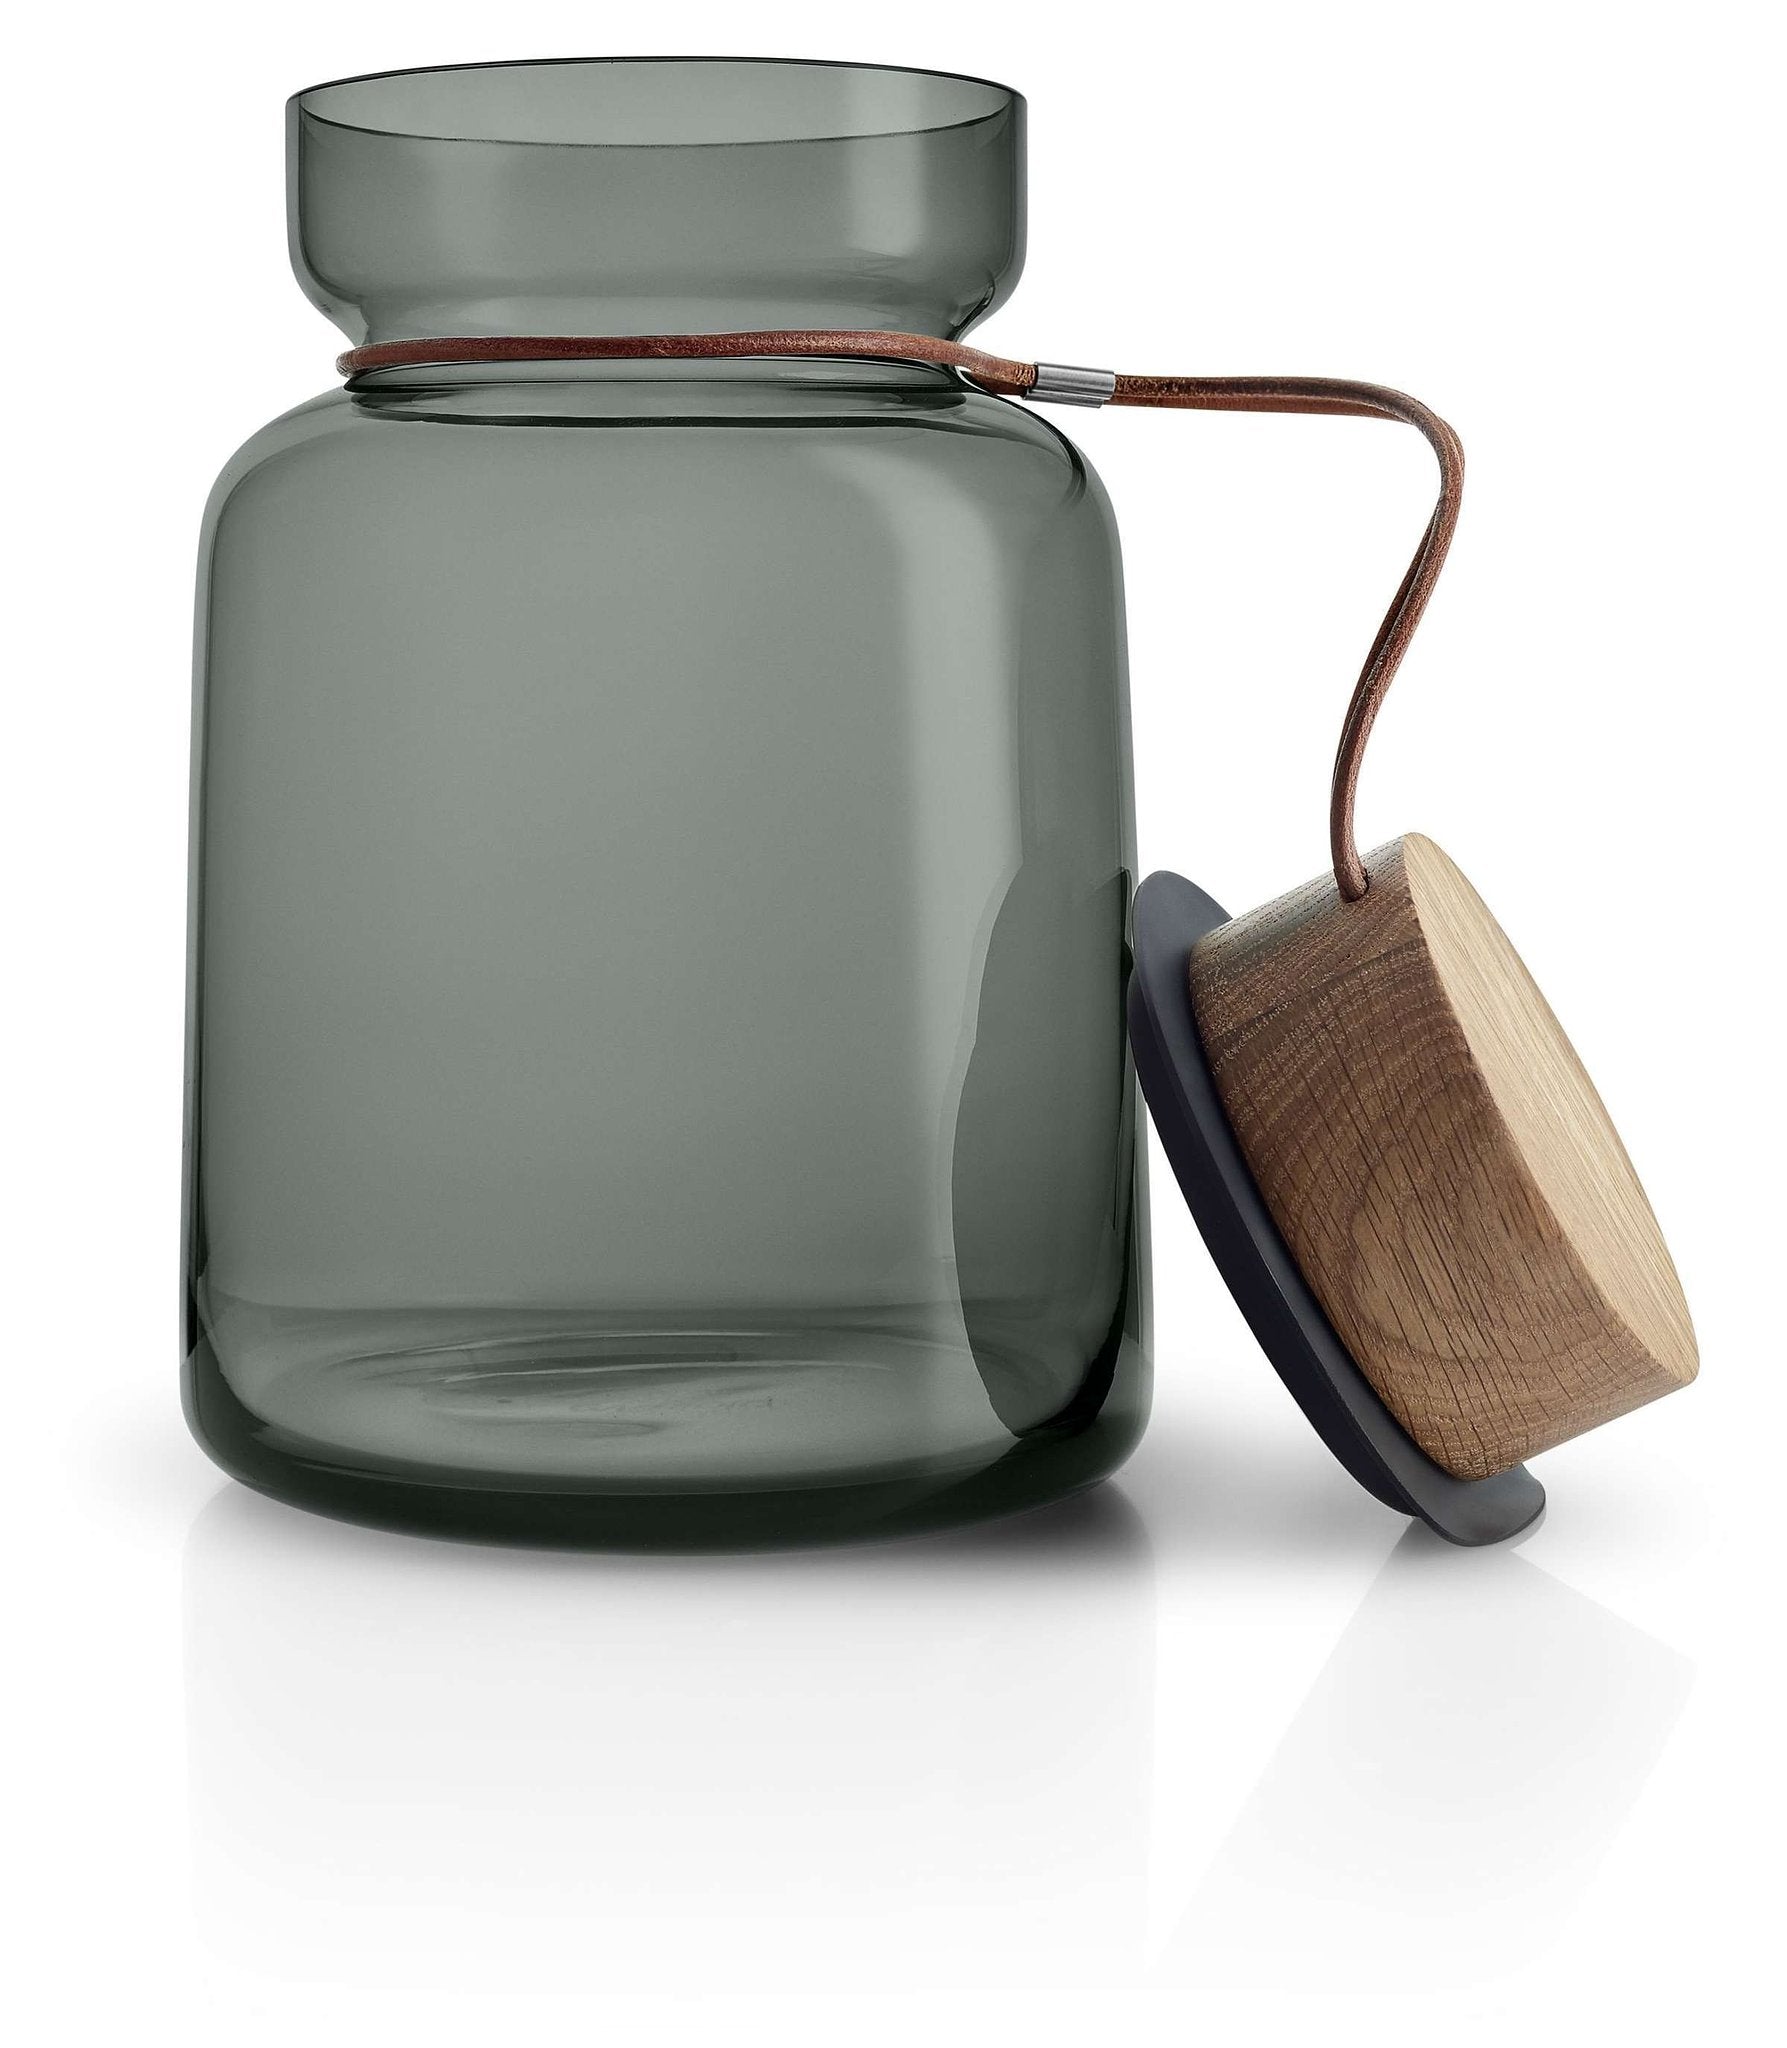 Eva Solo Nordic Kitchen Silhouette Storage Jar 2 liter